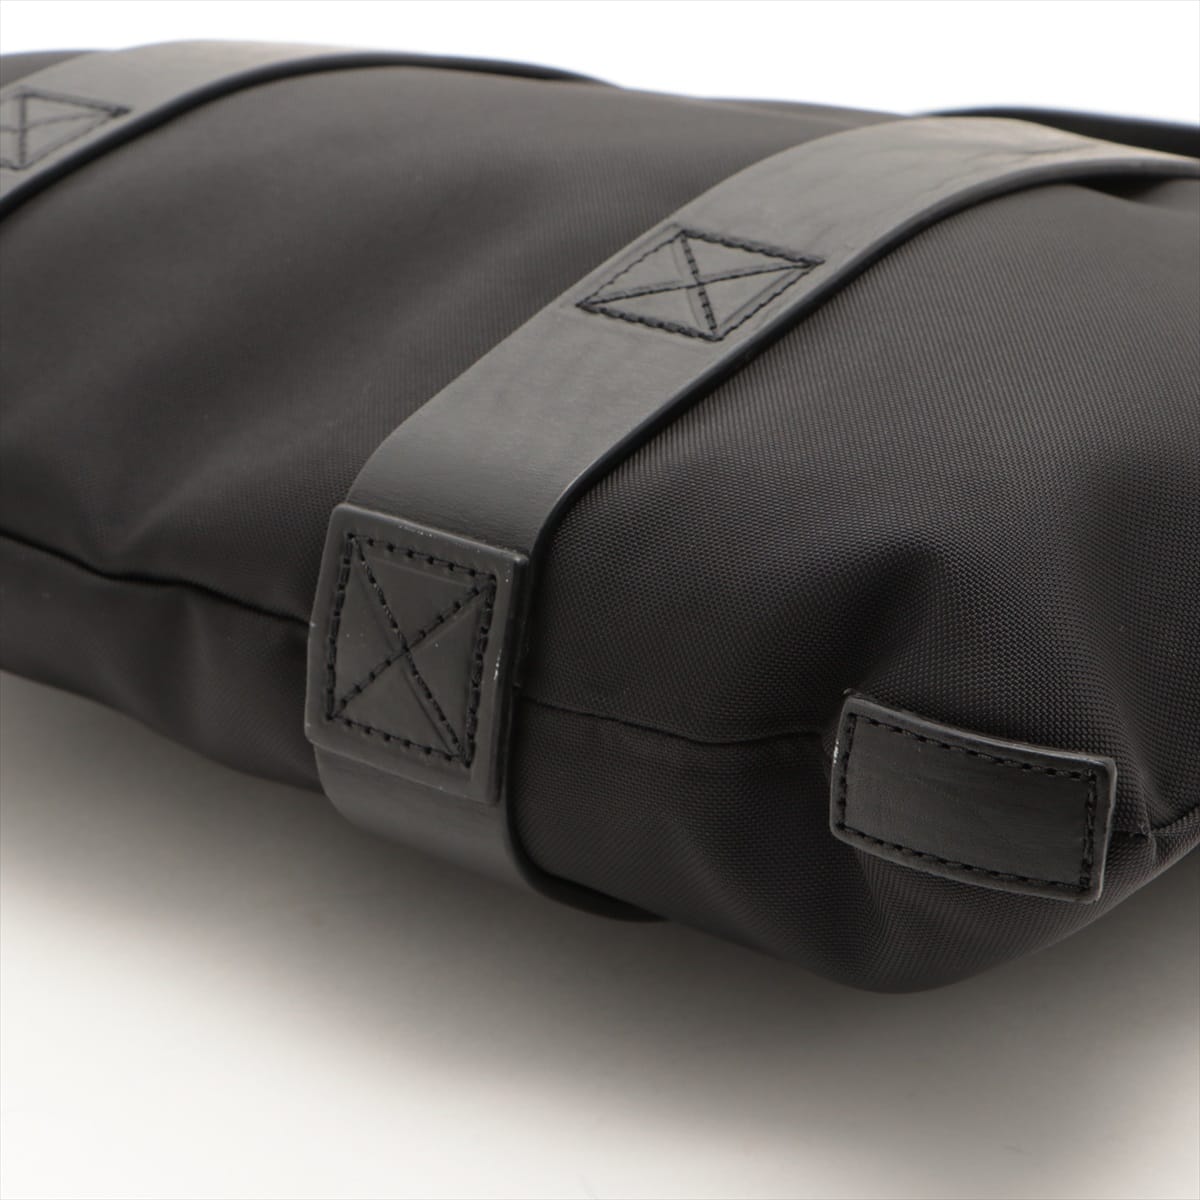 Theory Nylon & leather 2 way tote bag Black